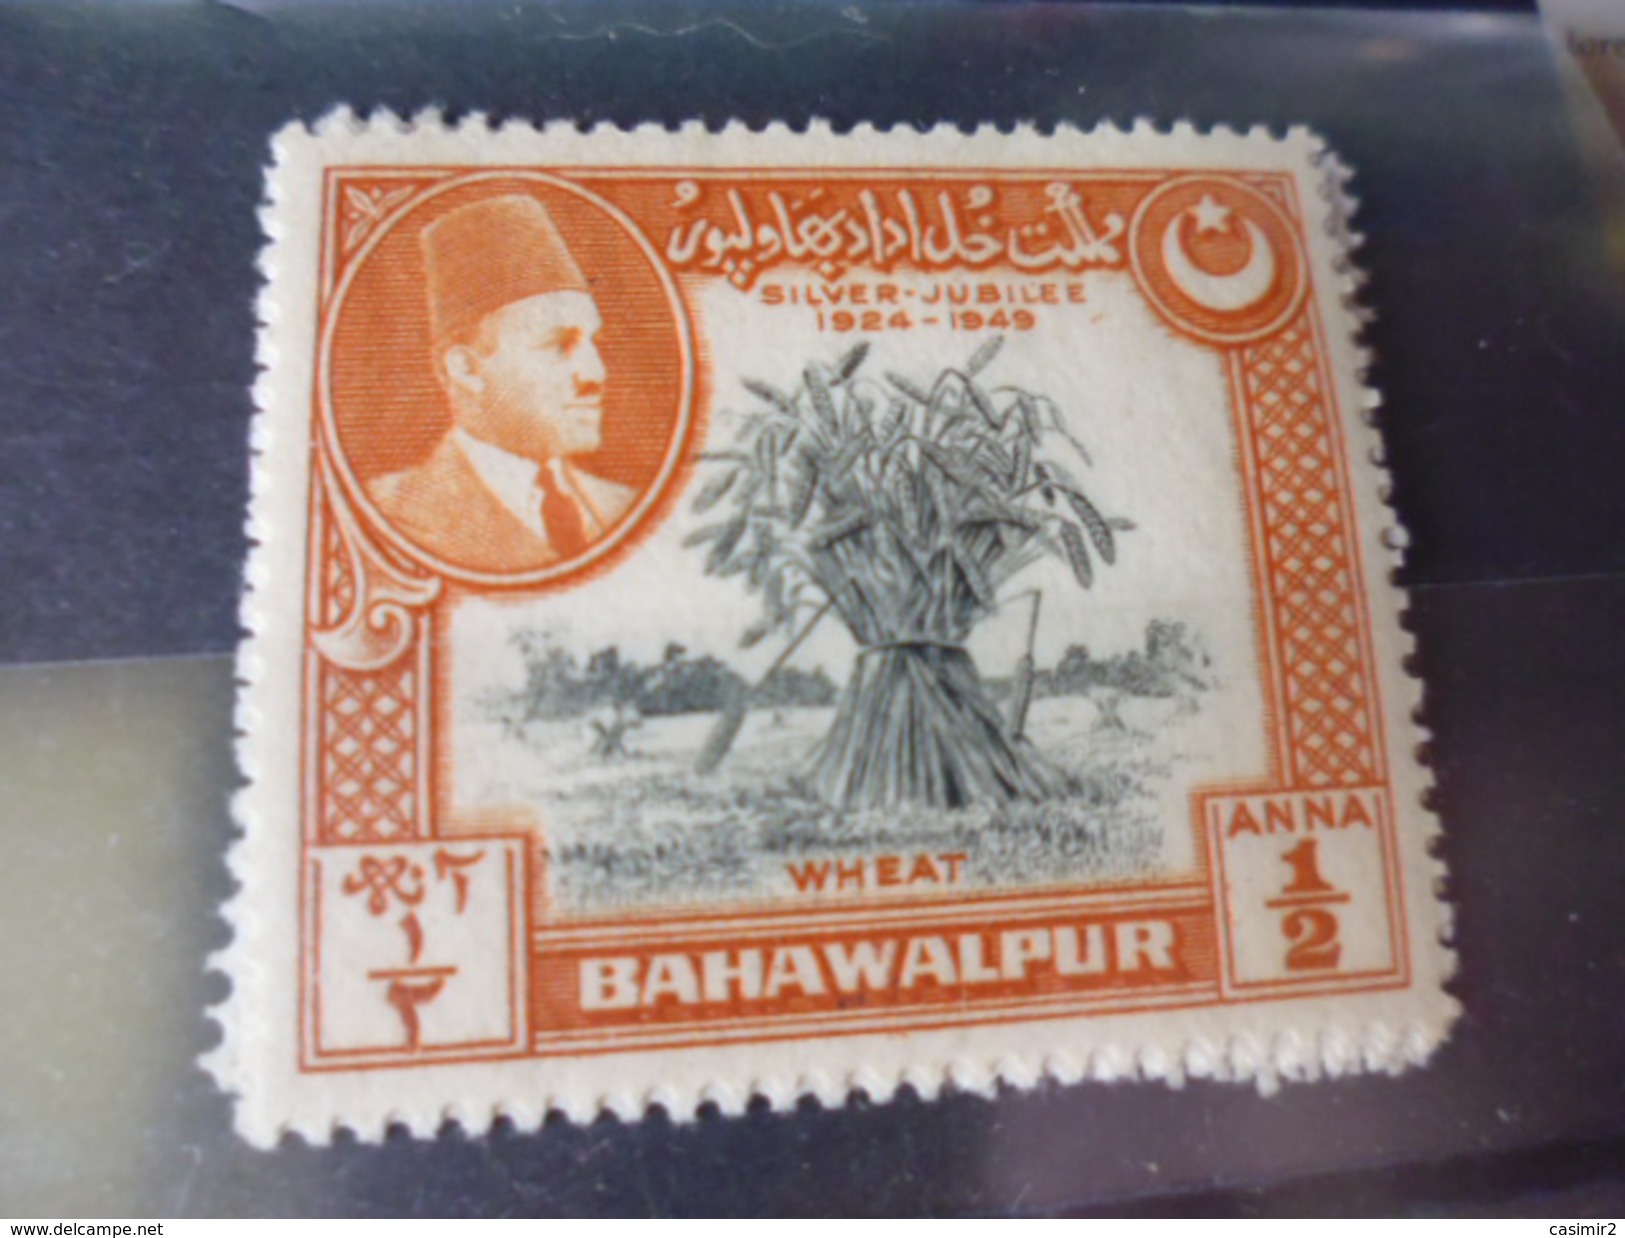 BAHAWALPUR TIMBRE OU SERIE YVERT N°19** - Bahawalpur